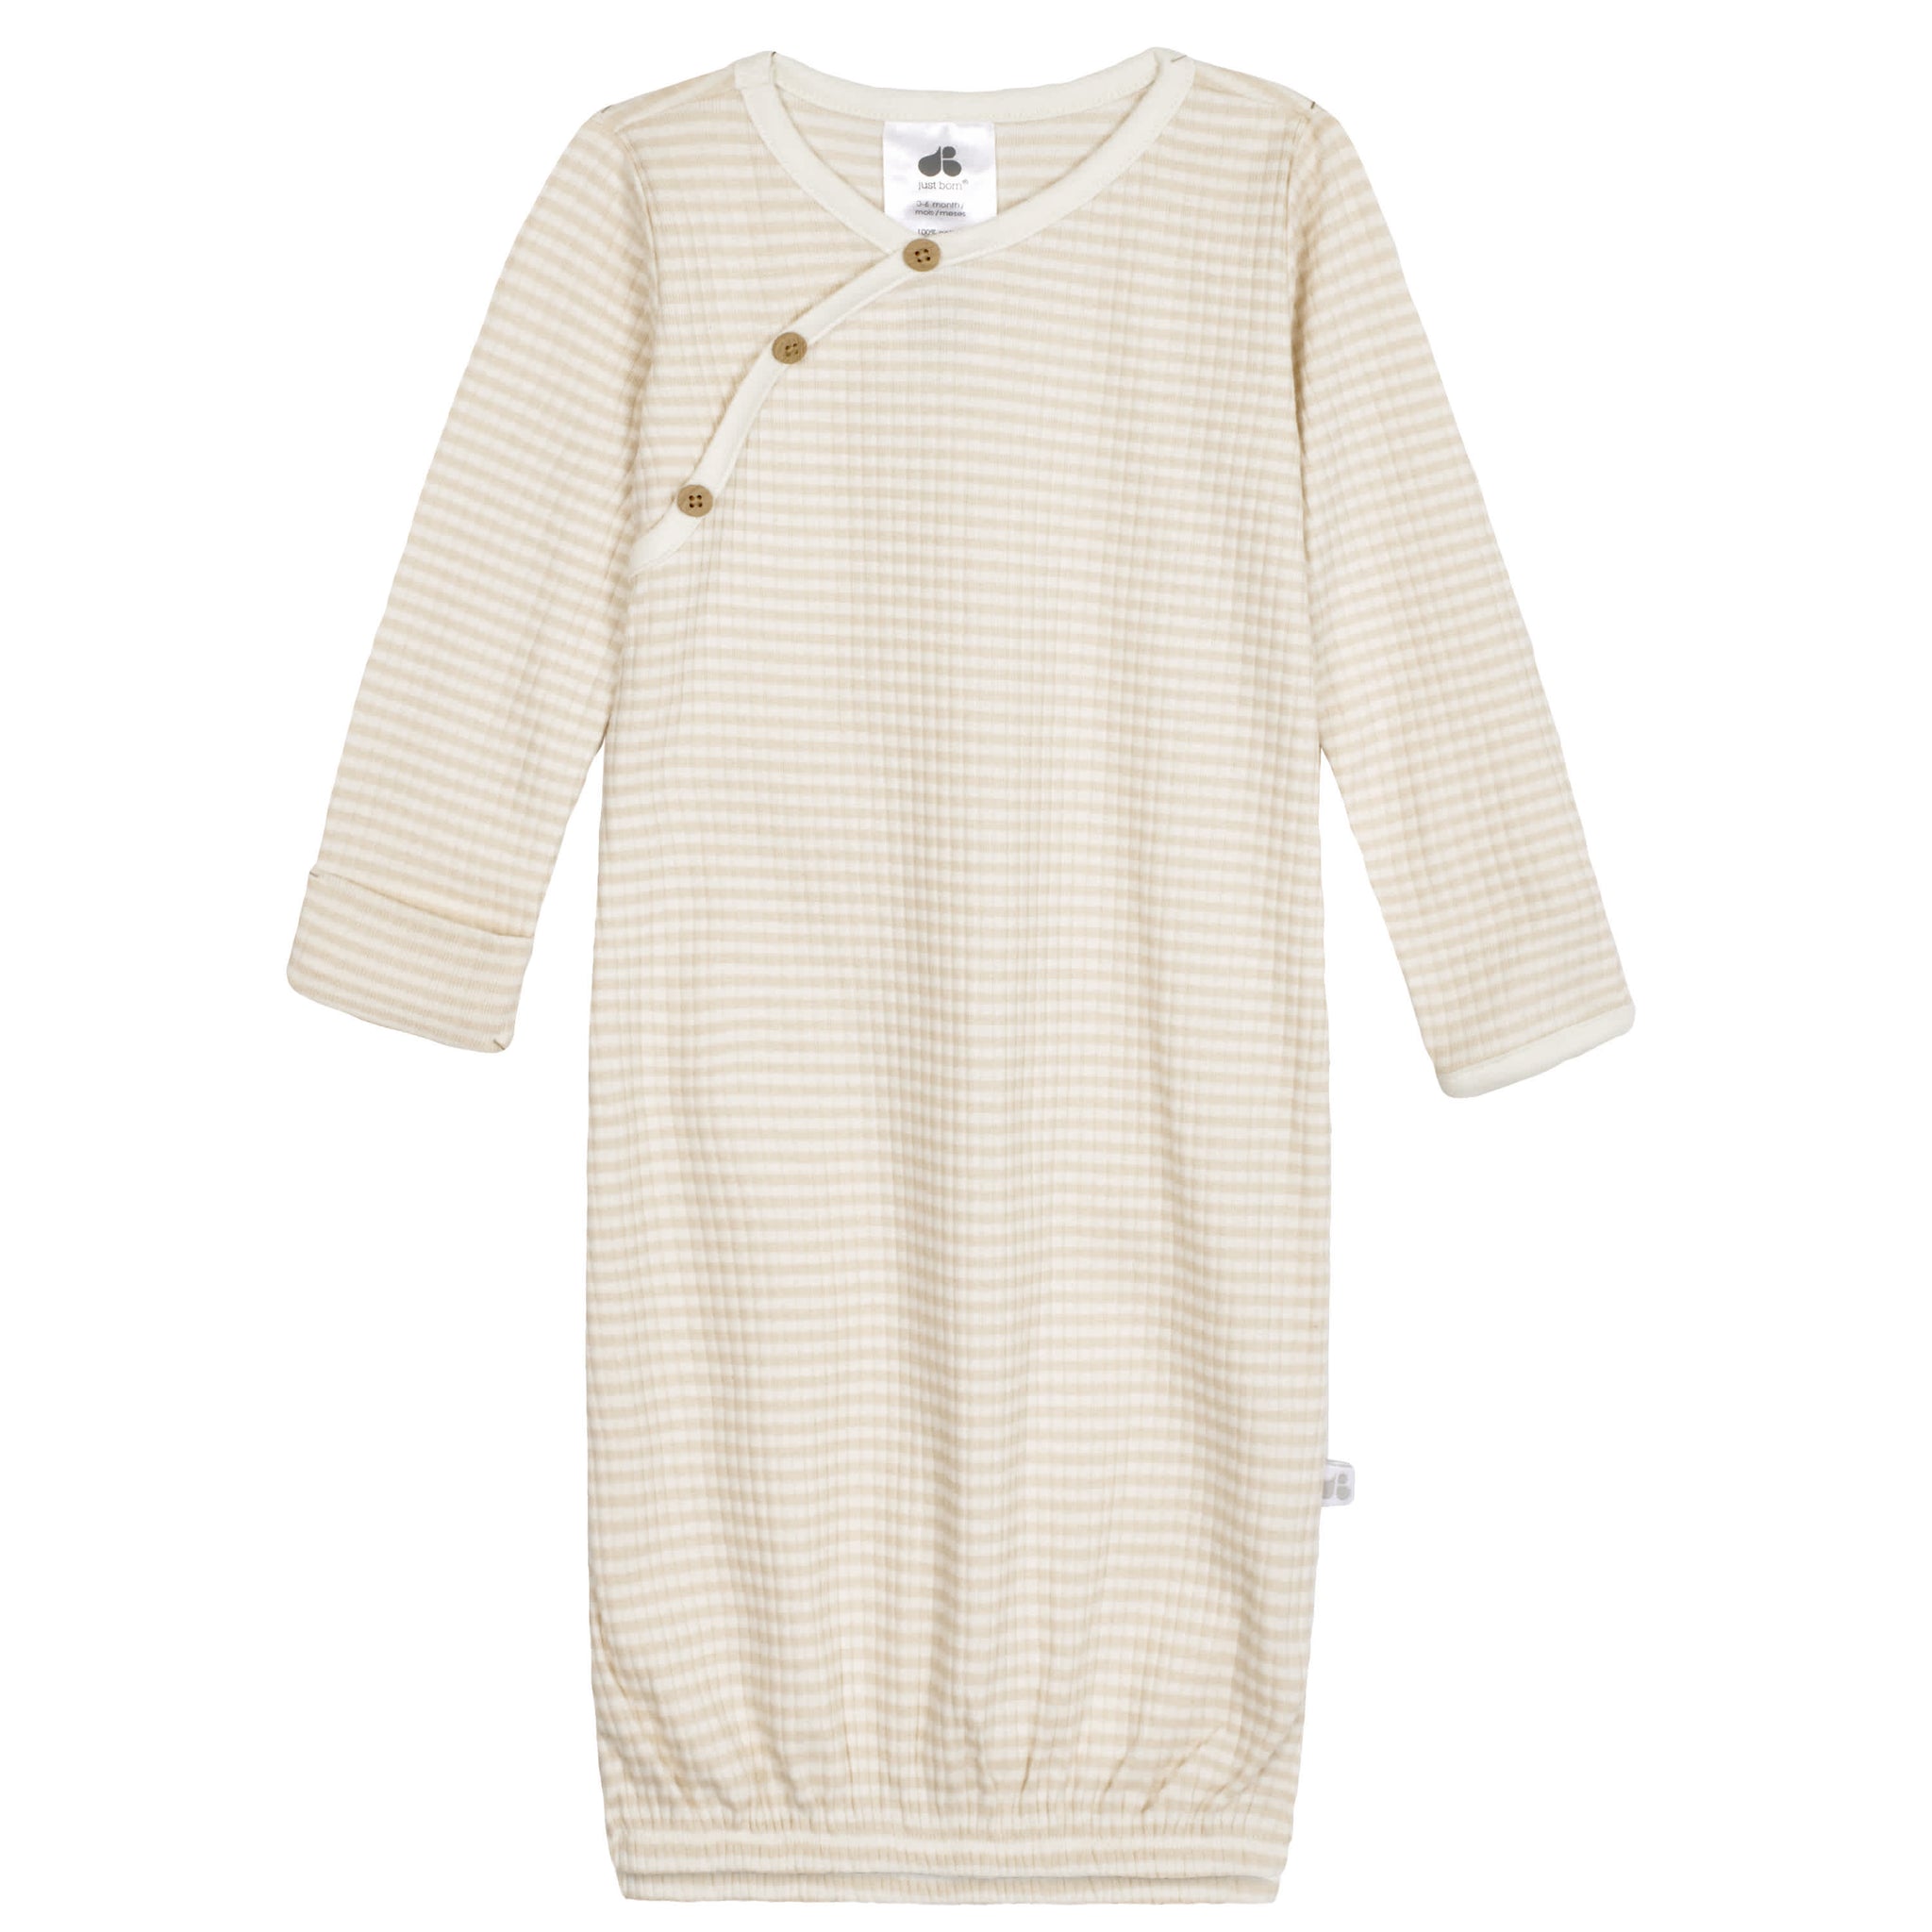 Baby Neutral Almond Stripe Gown-Gerber Childrenswear Wholesale